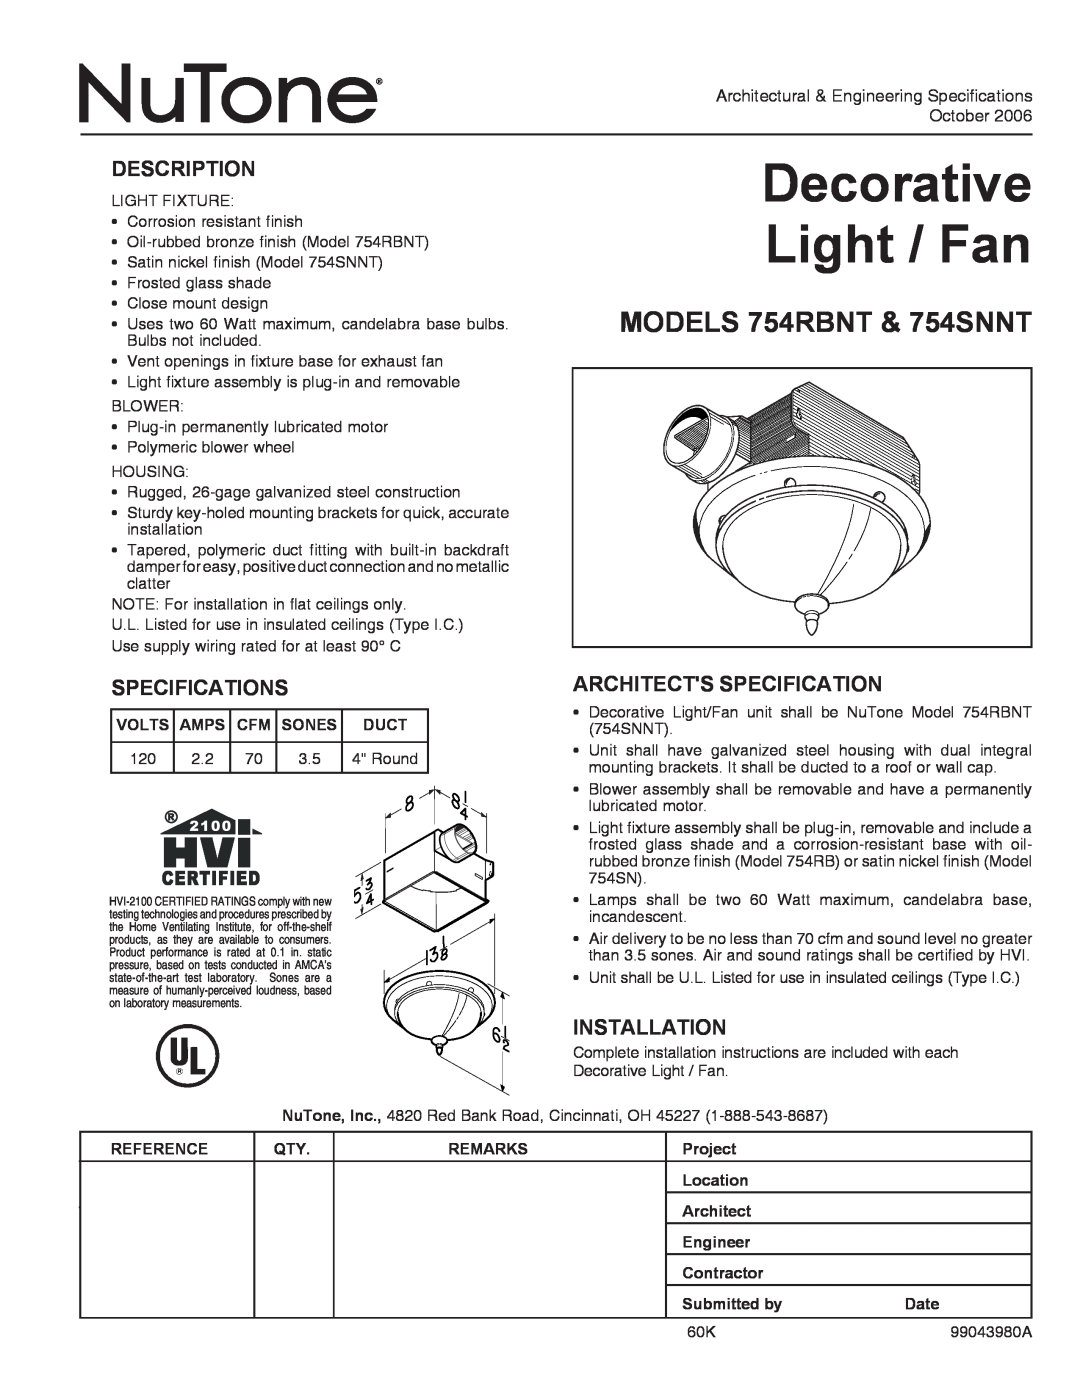 NuTone specifications Decorative Light / Fan, MODELS 754RBNT & 754SNNT, Description, Specifications, Installation 